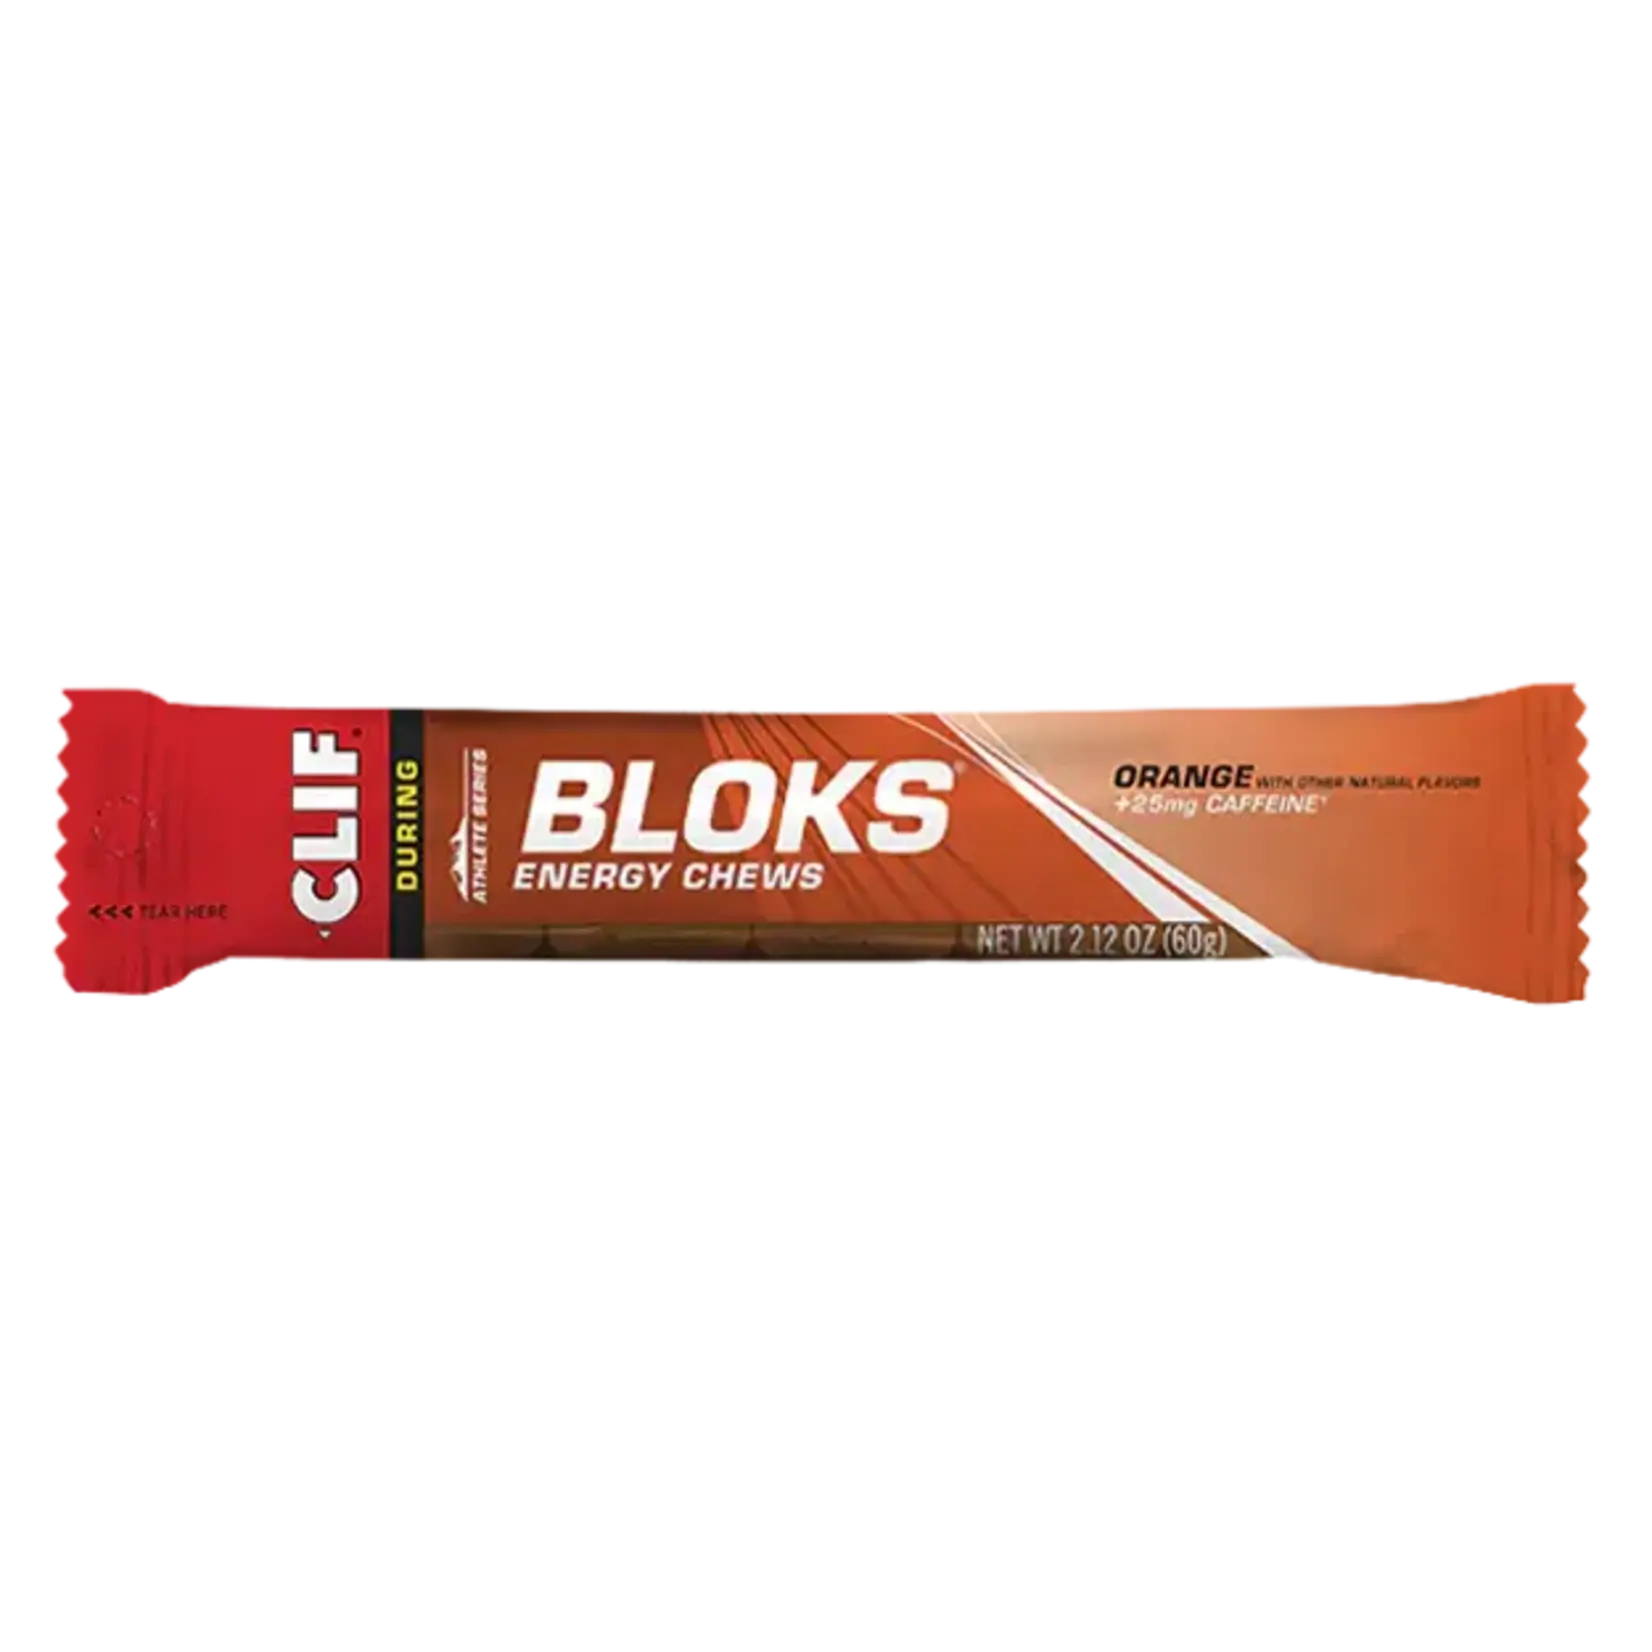 Clif Bar Bloks Energy Chews Orange with Caffeine single